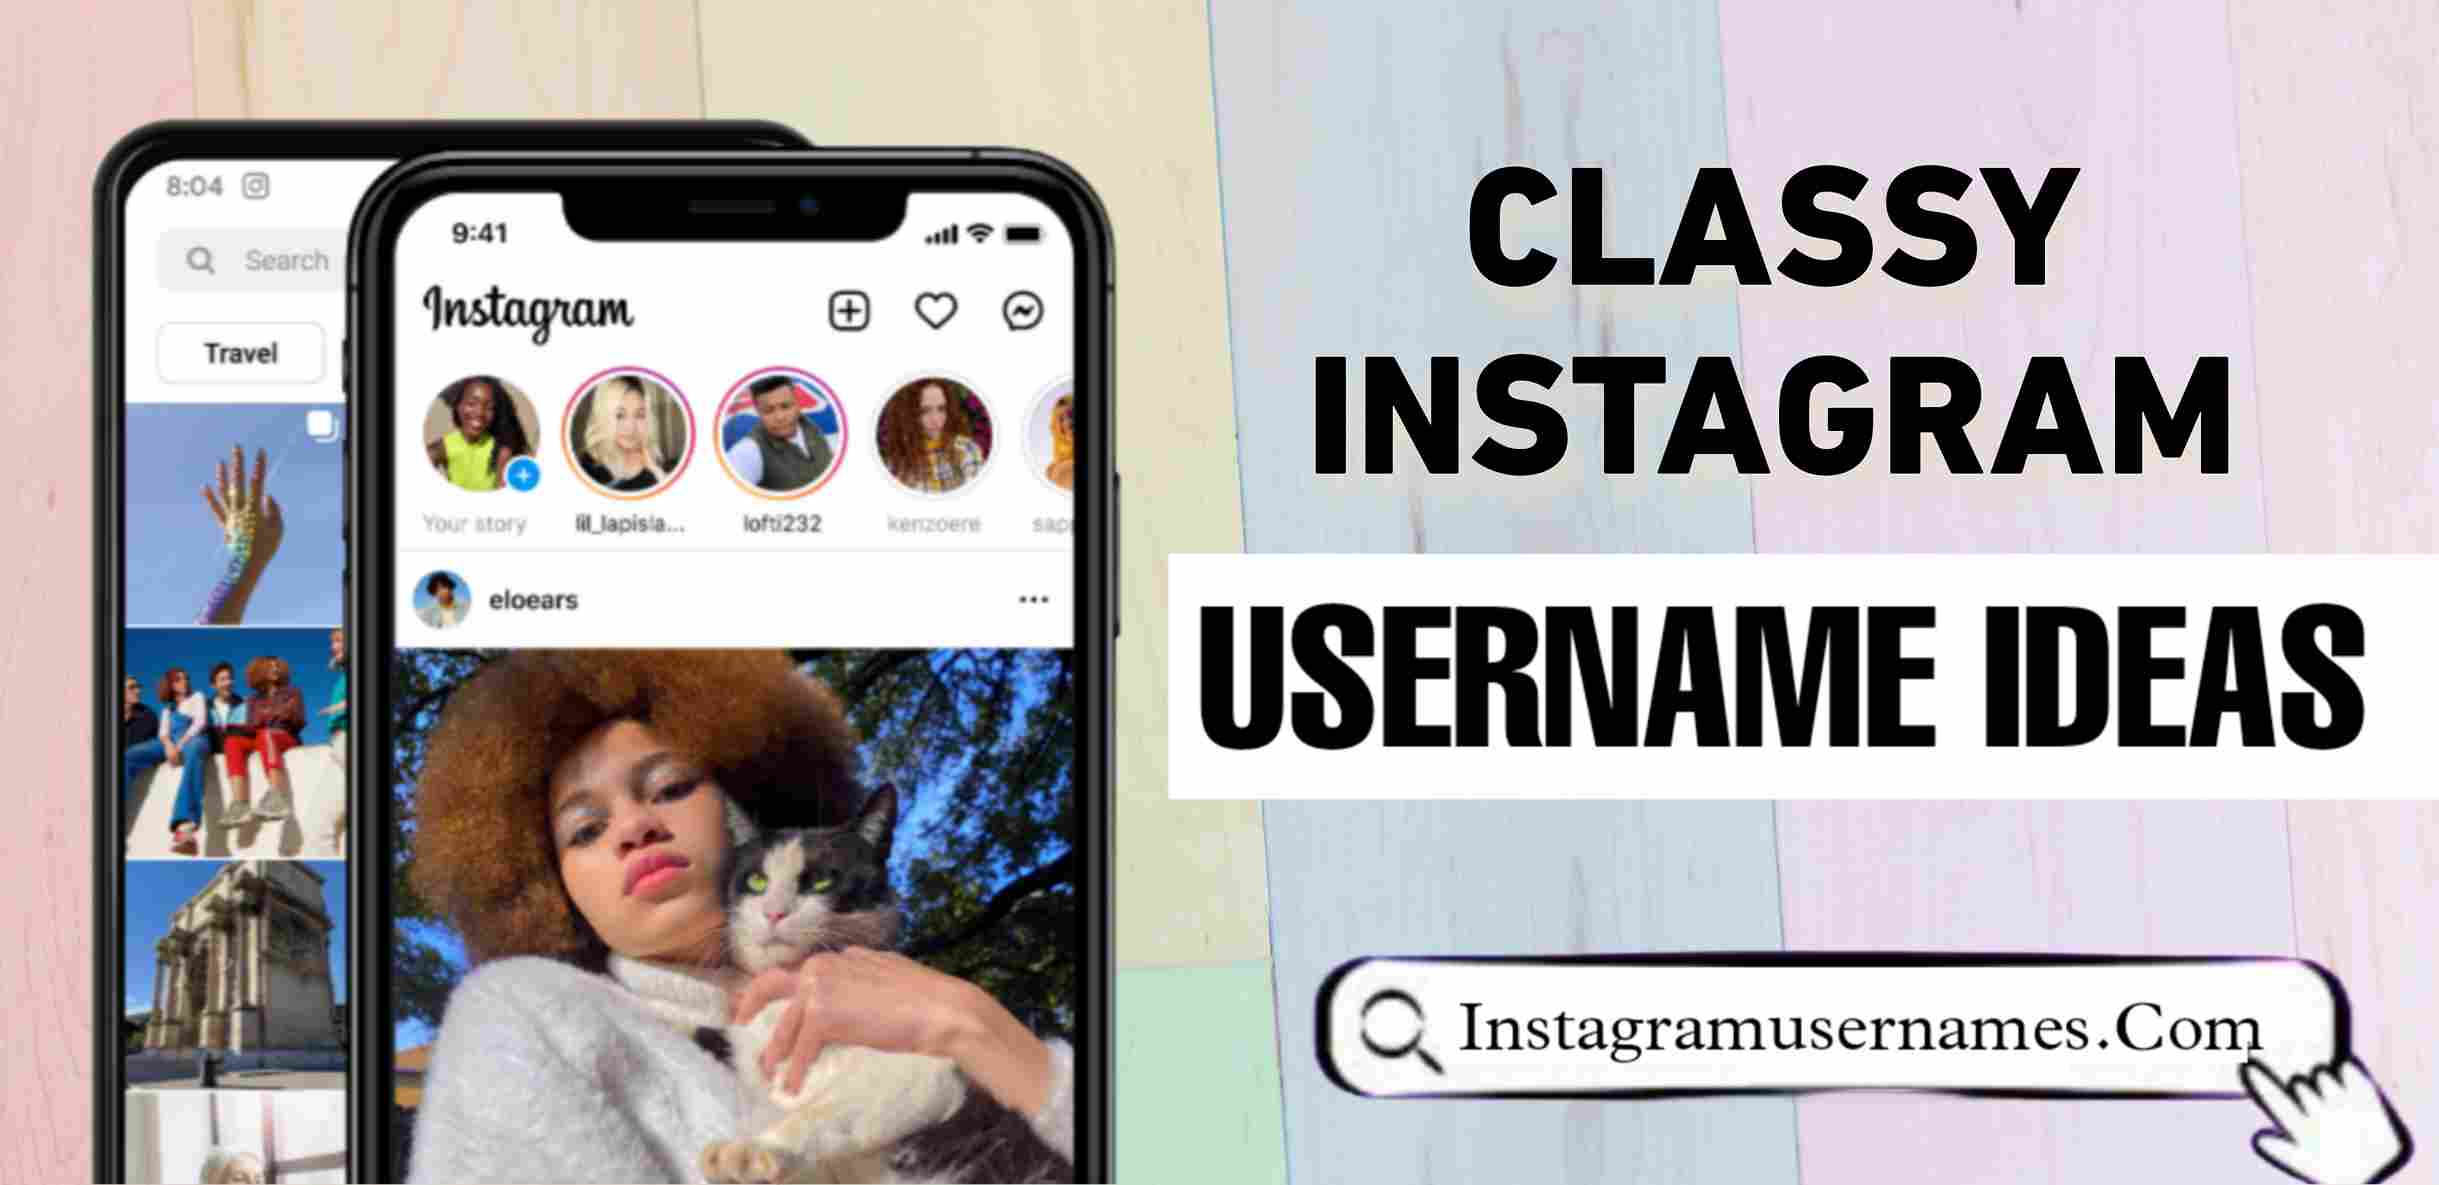 Classy Instagram Names Ideas